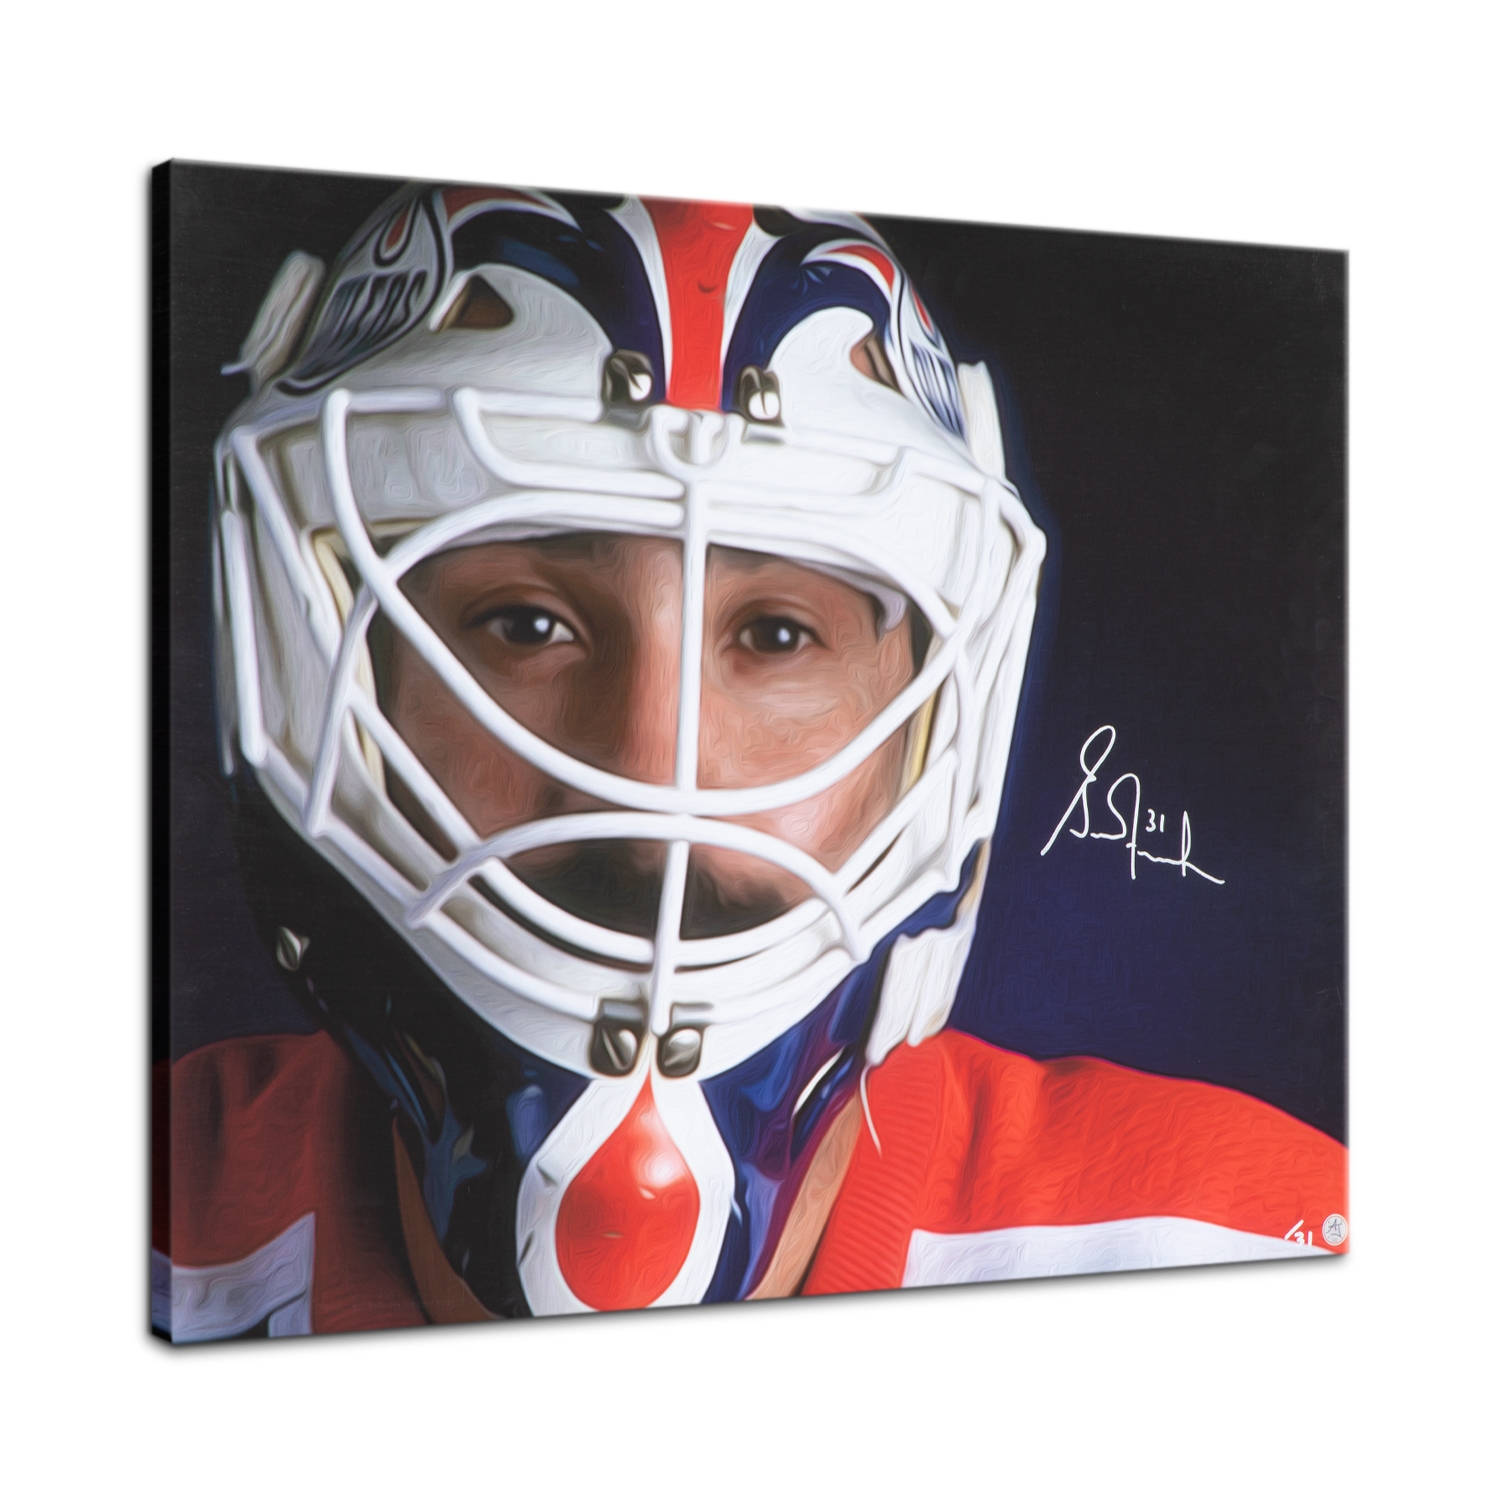 Grant Fuhr Signed Edmonton Hockey Goalie Mask Portrait 26x32 Art Canvas #/31